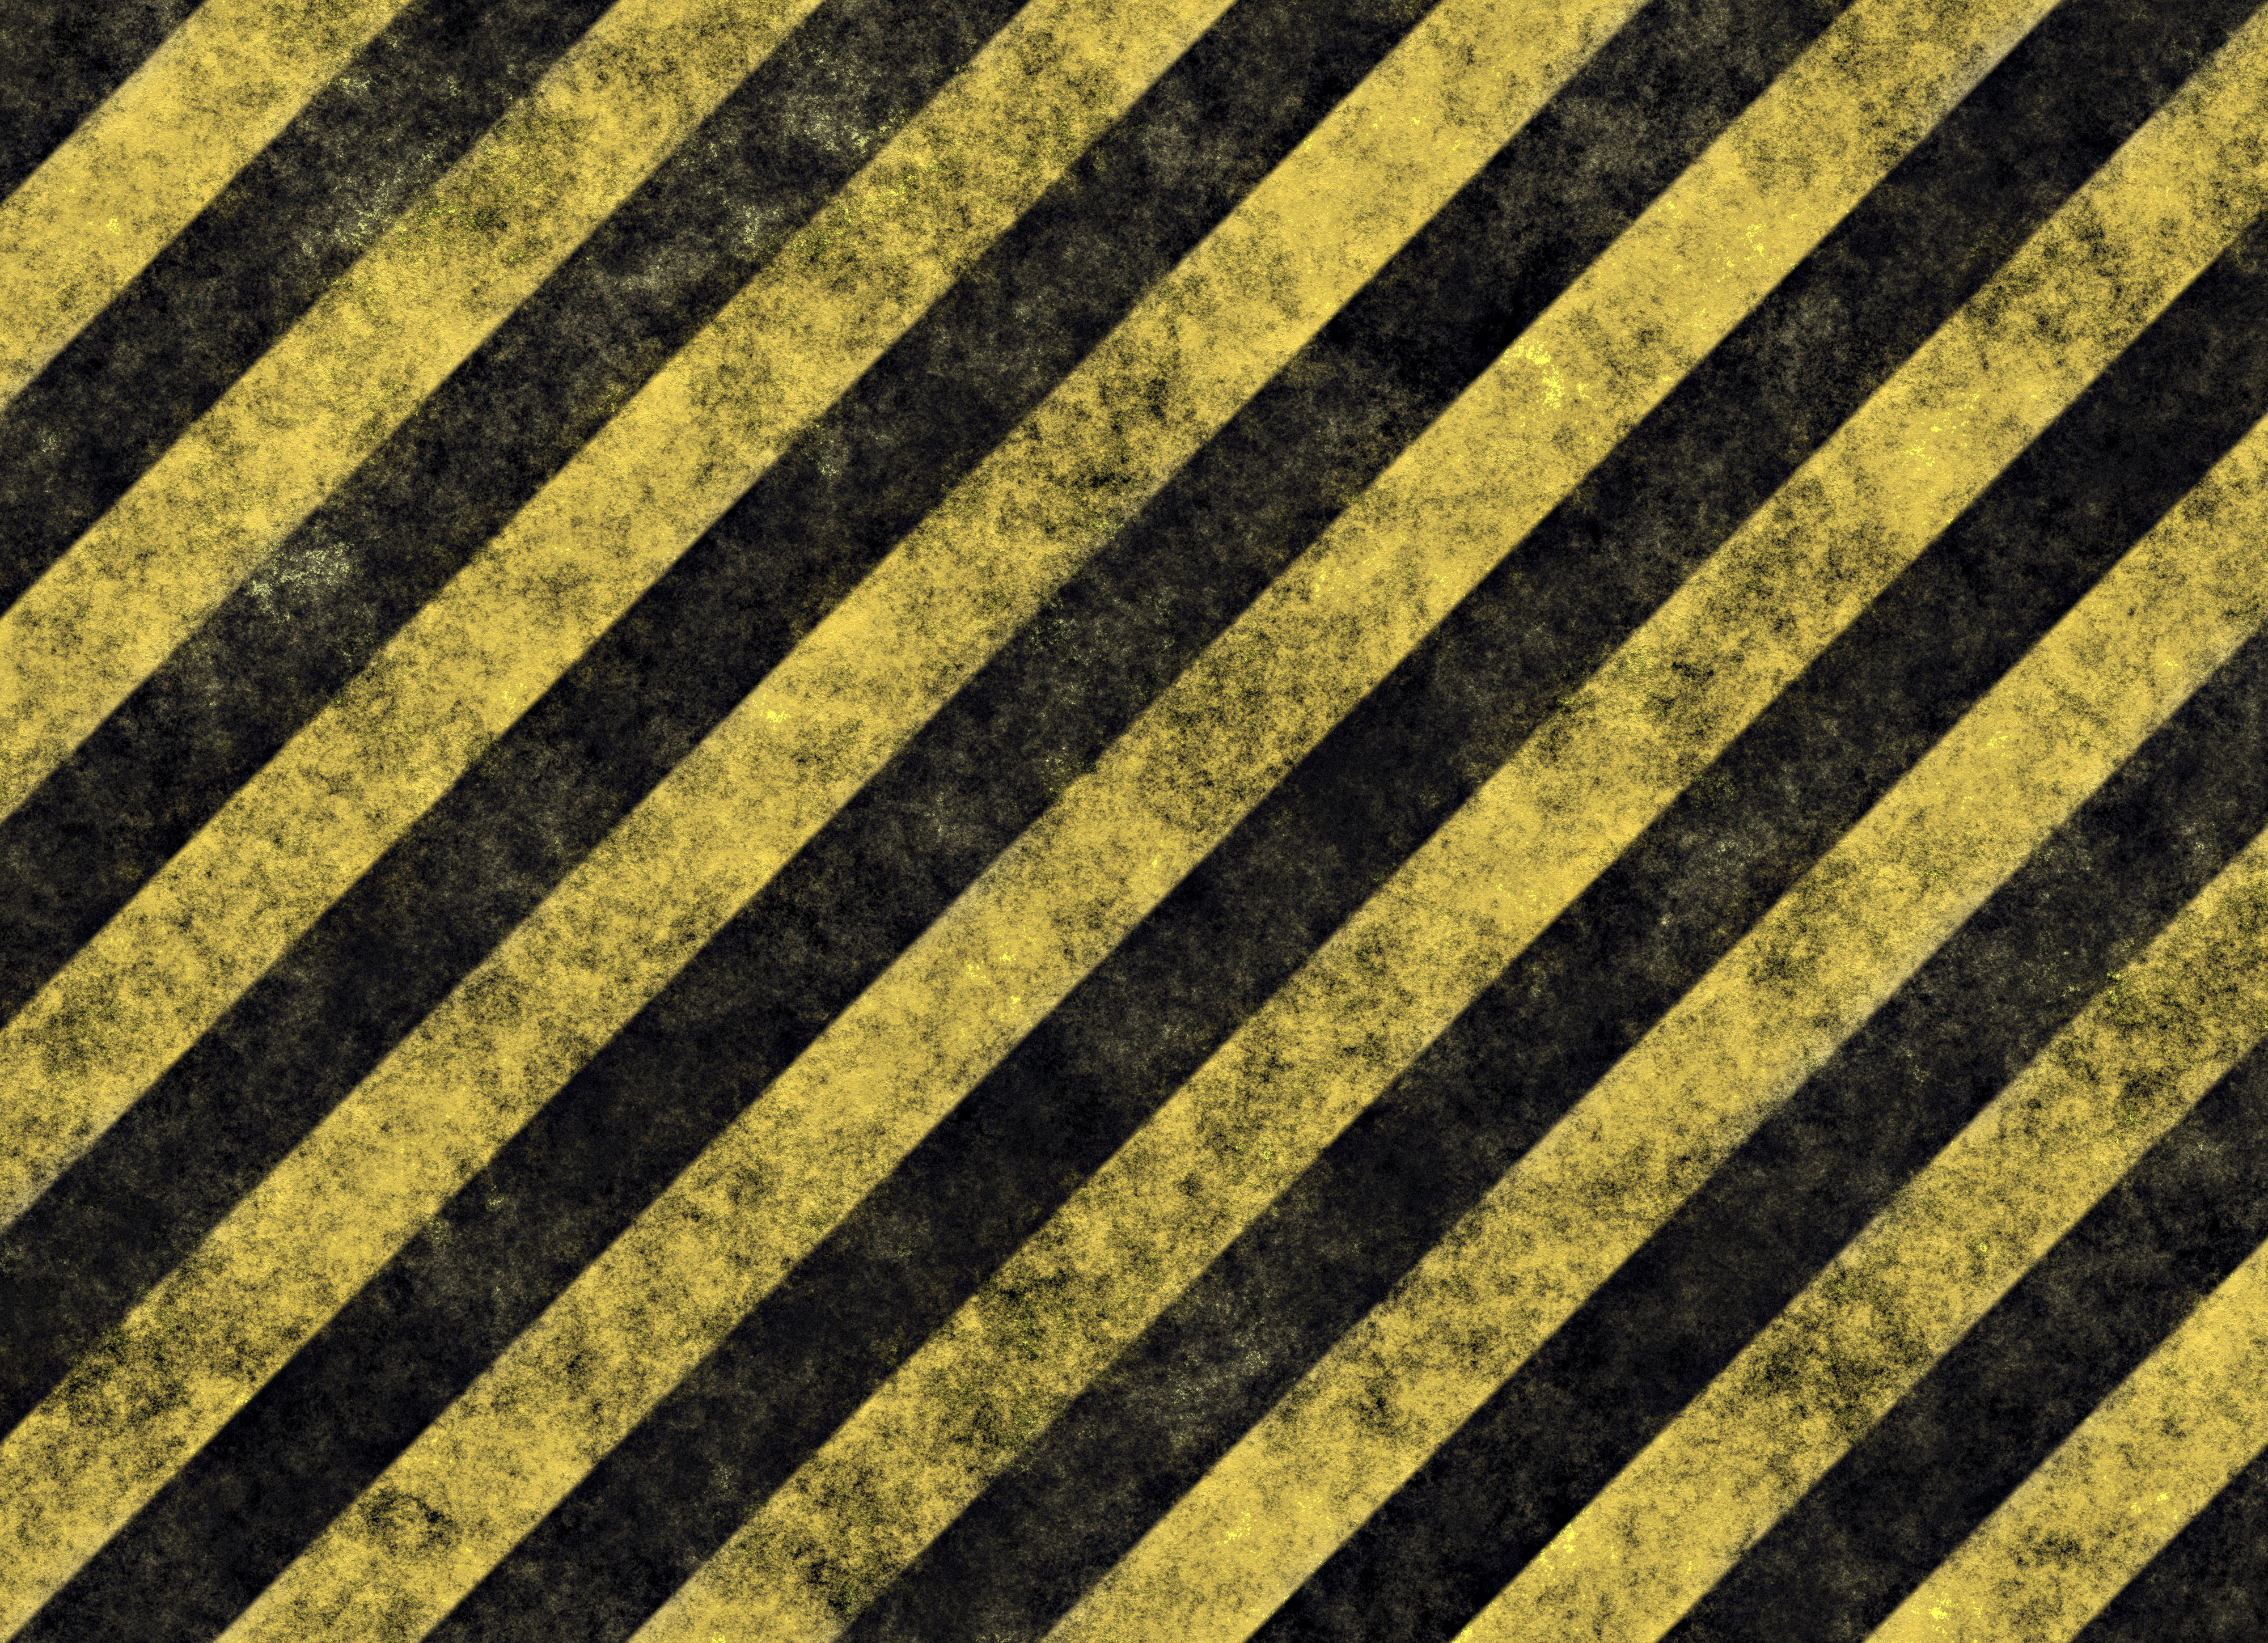 Hazard Stripes Wallpaper Or Background Image